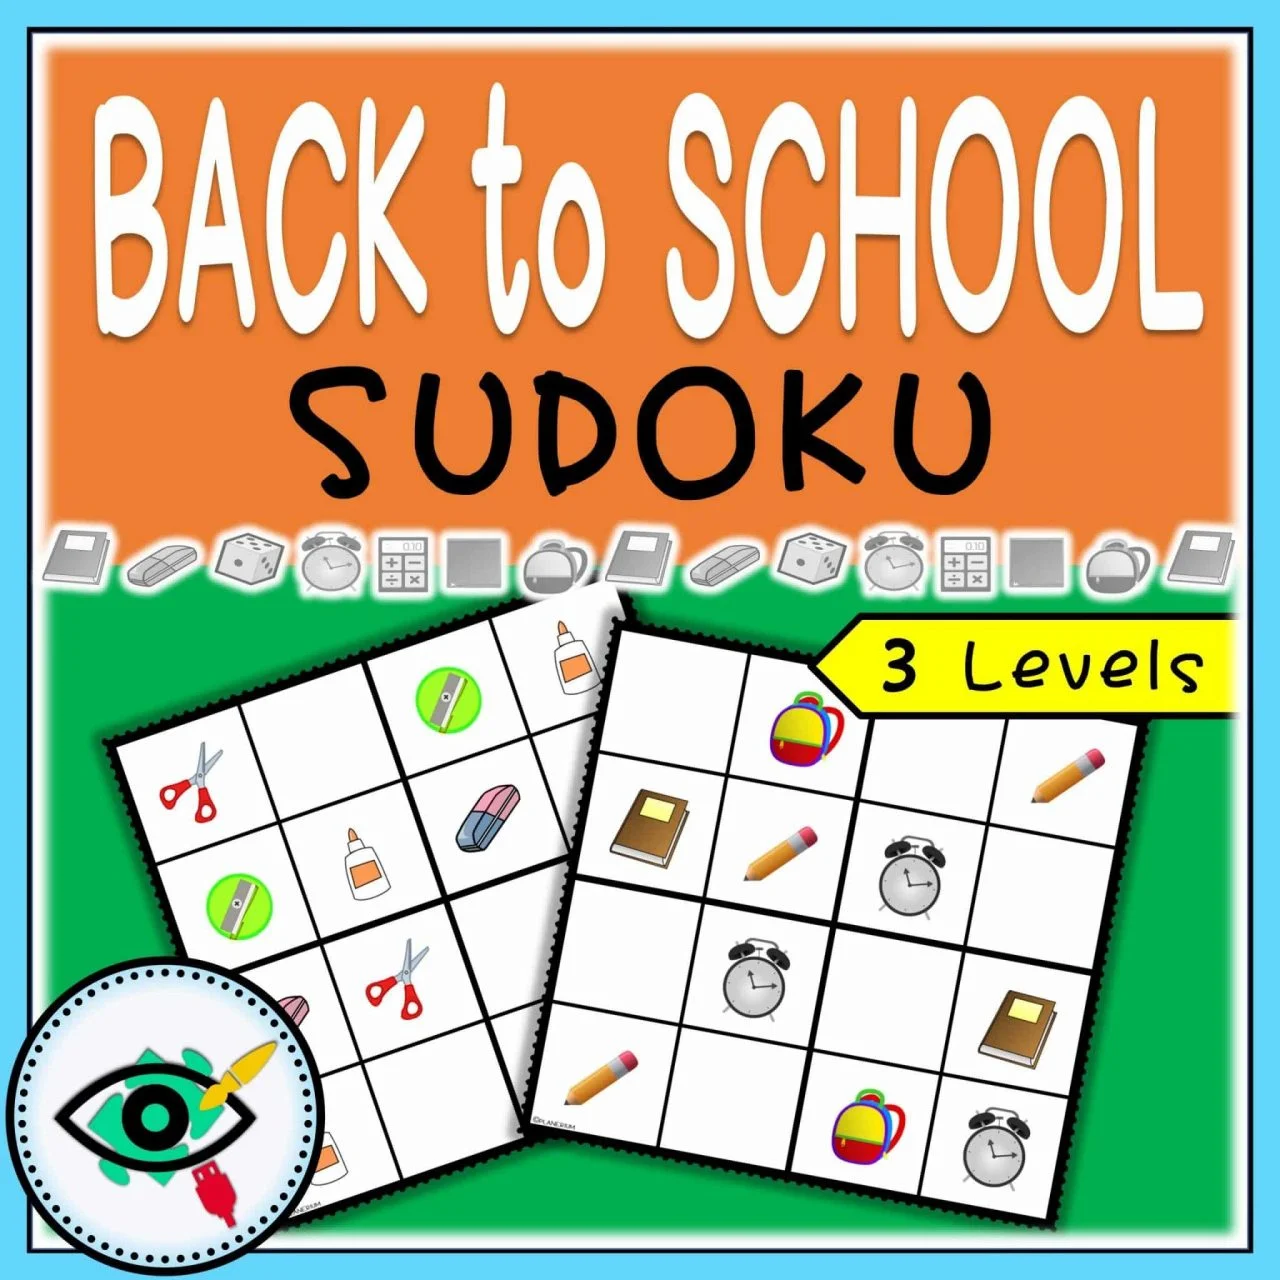 Back to School - Sudoku | Planerium